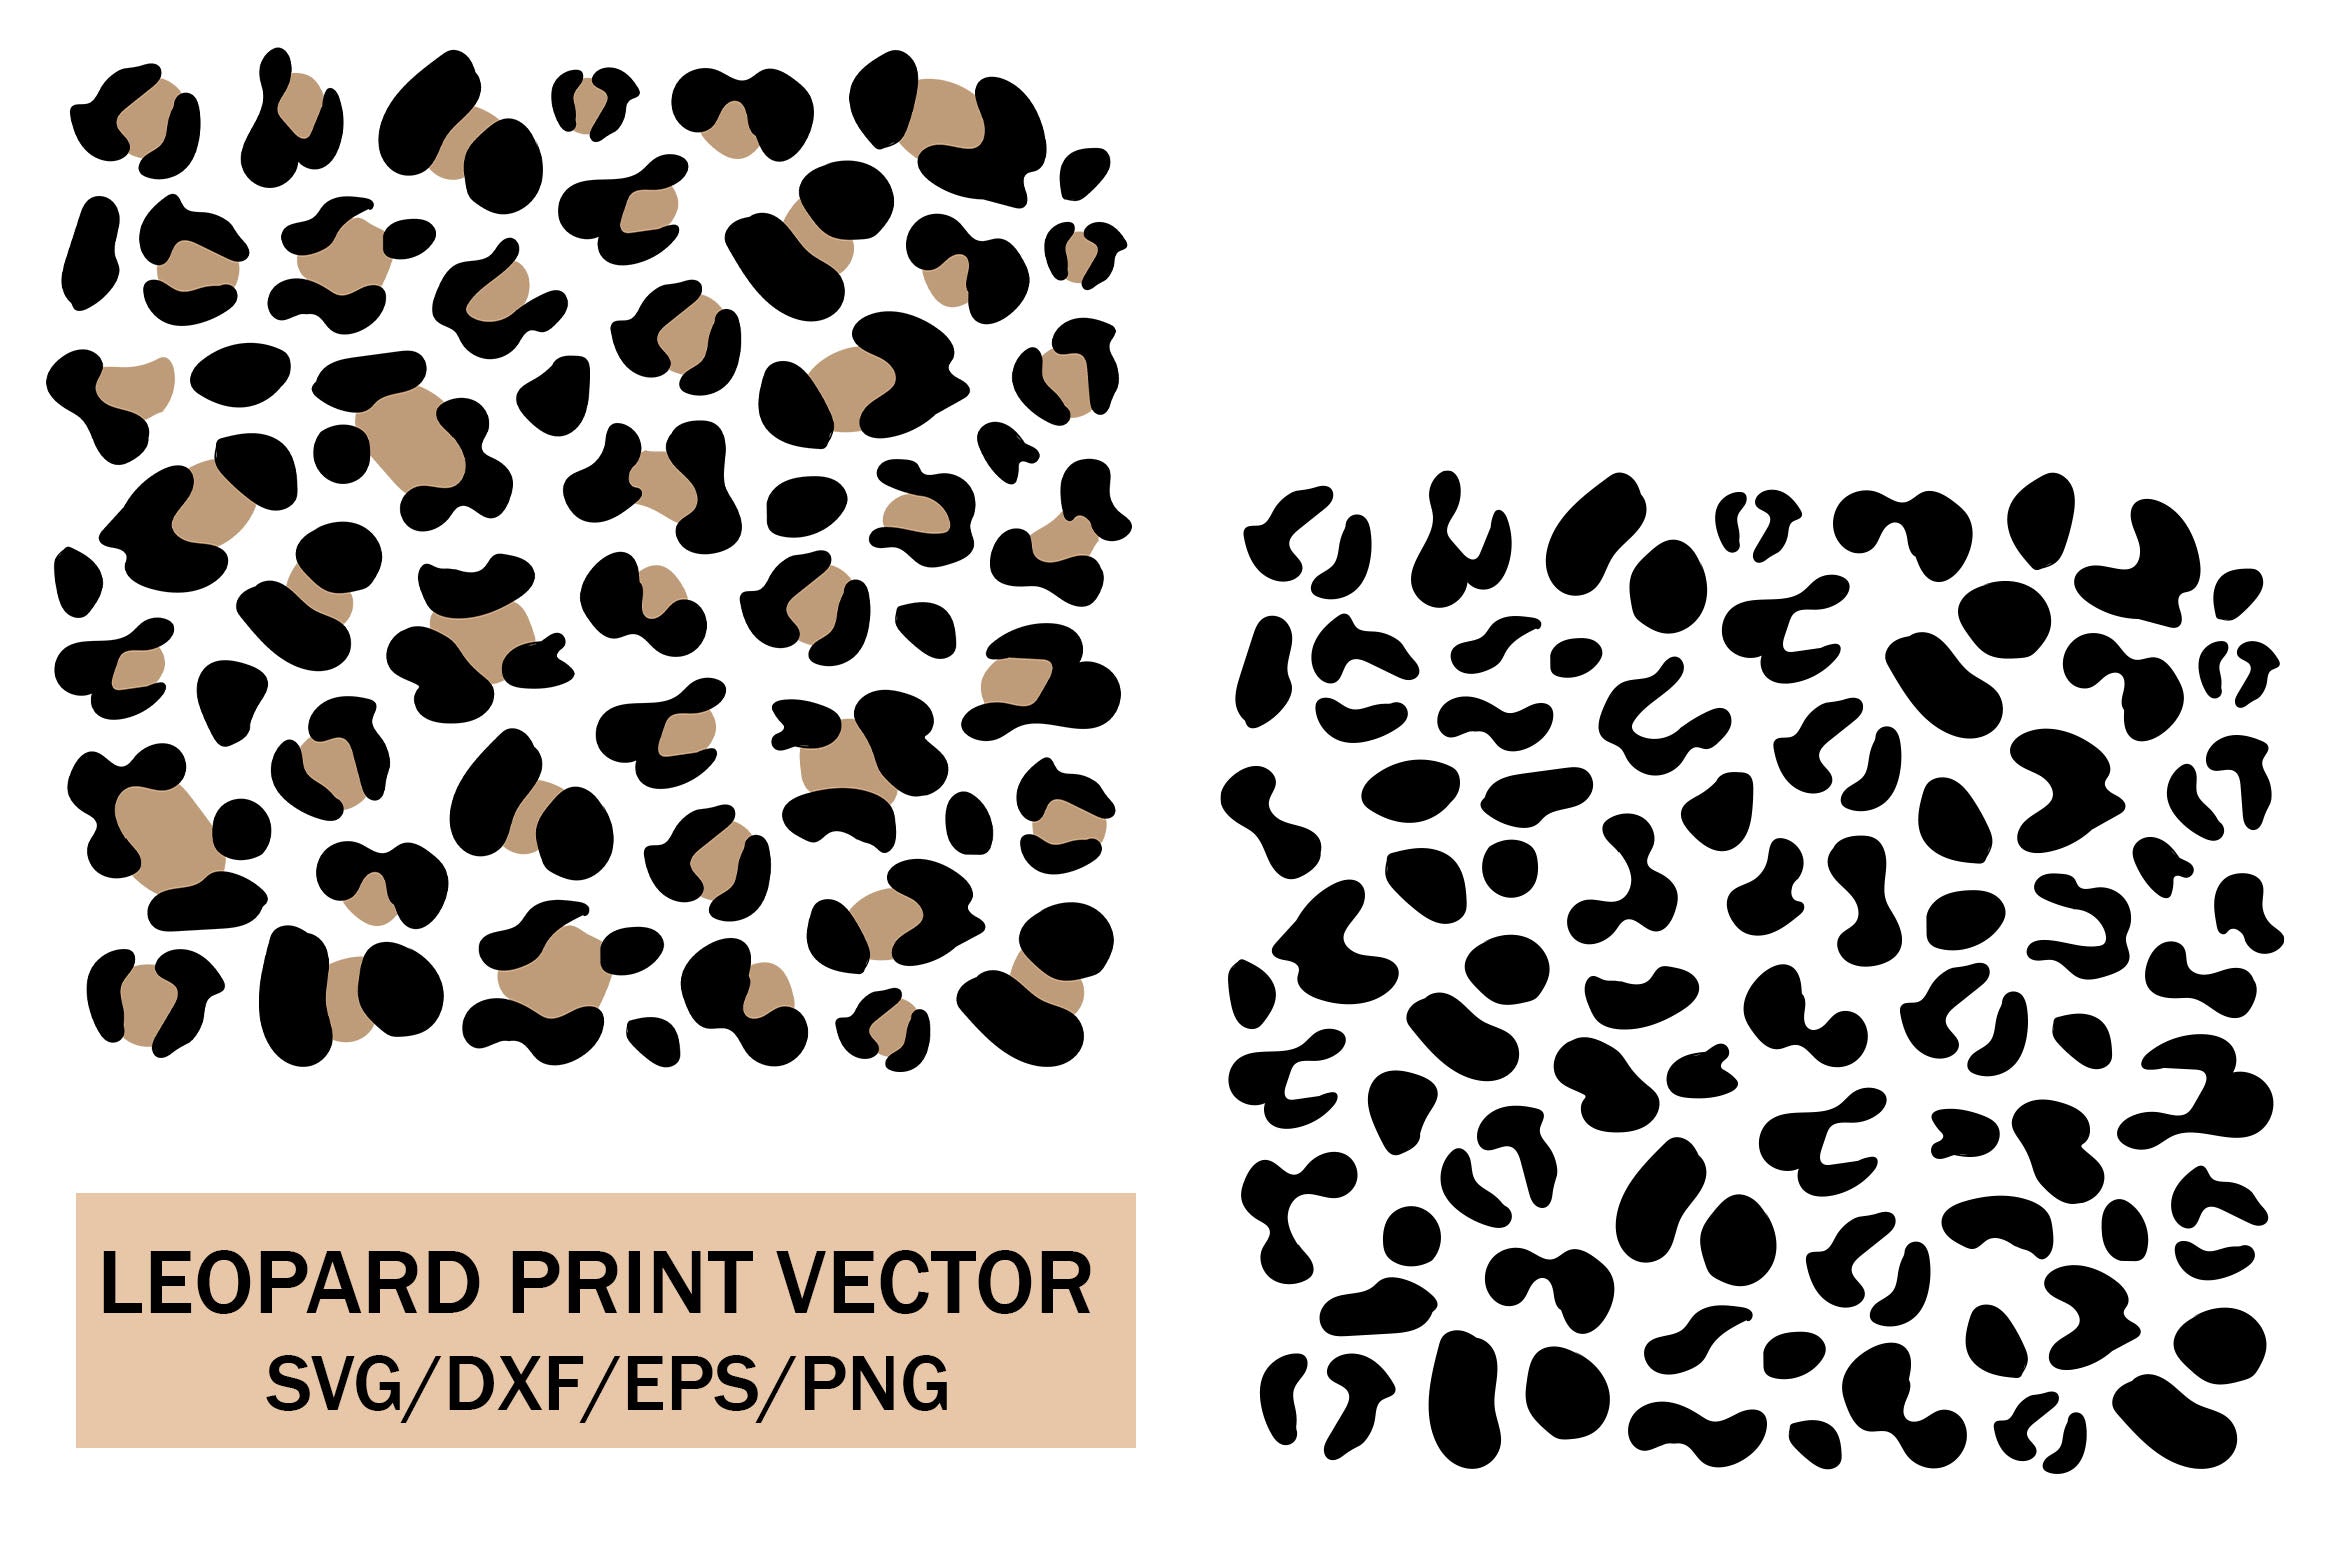 SVG Cut Files, Leopard Svg, Leopard PNG, Leopard Print Svg, Cheetah Svg,  Cheetah Png, DIY Crafts Gift Ideas